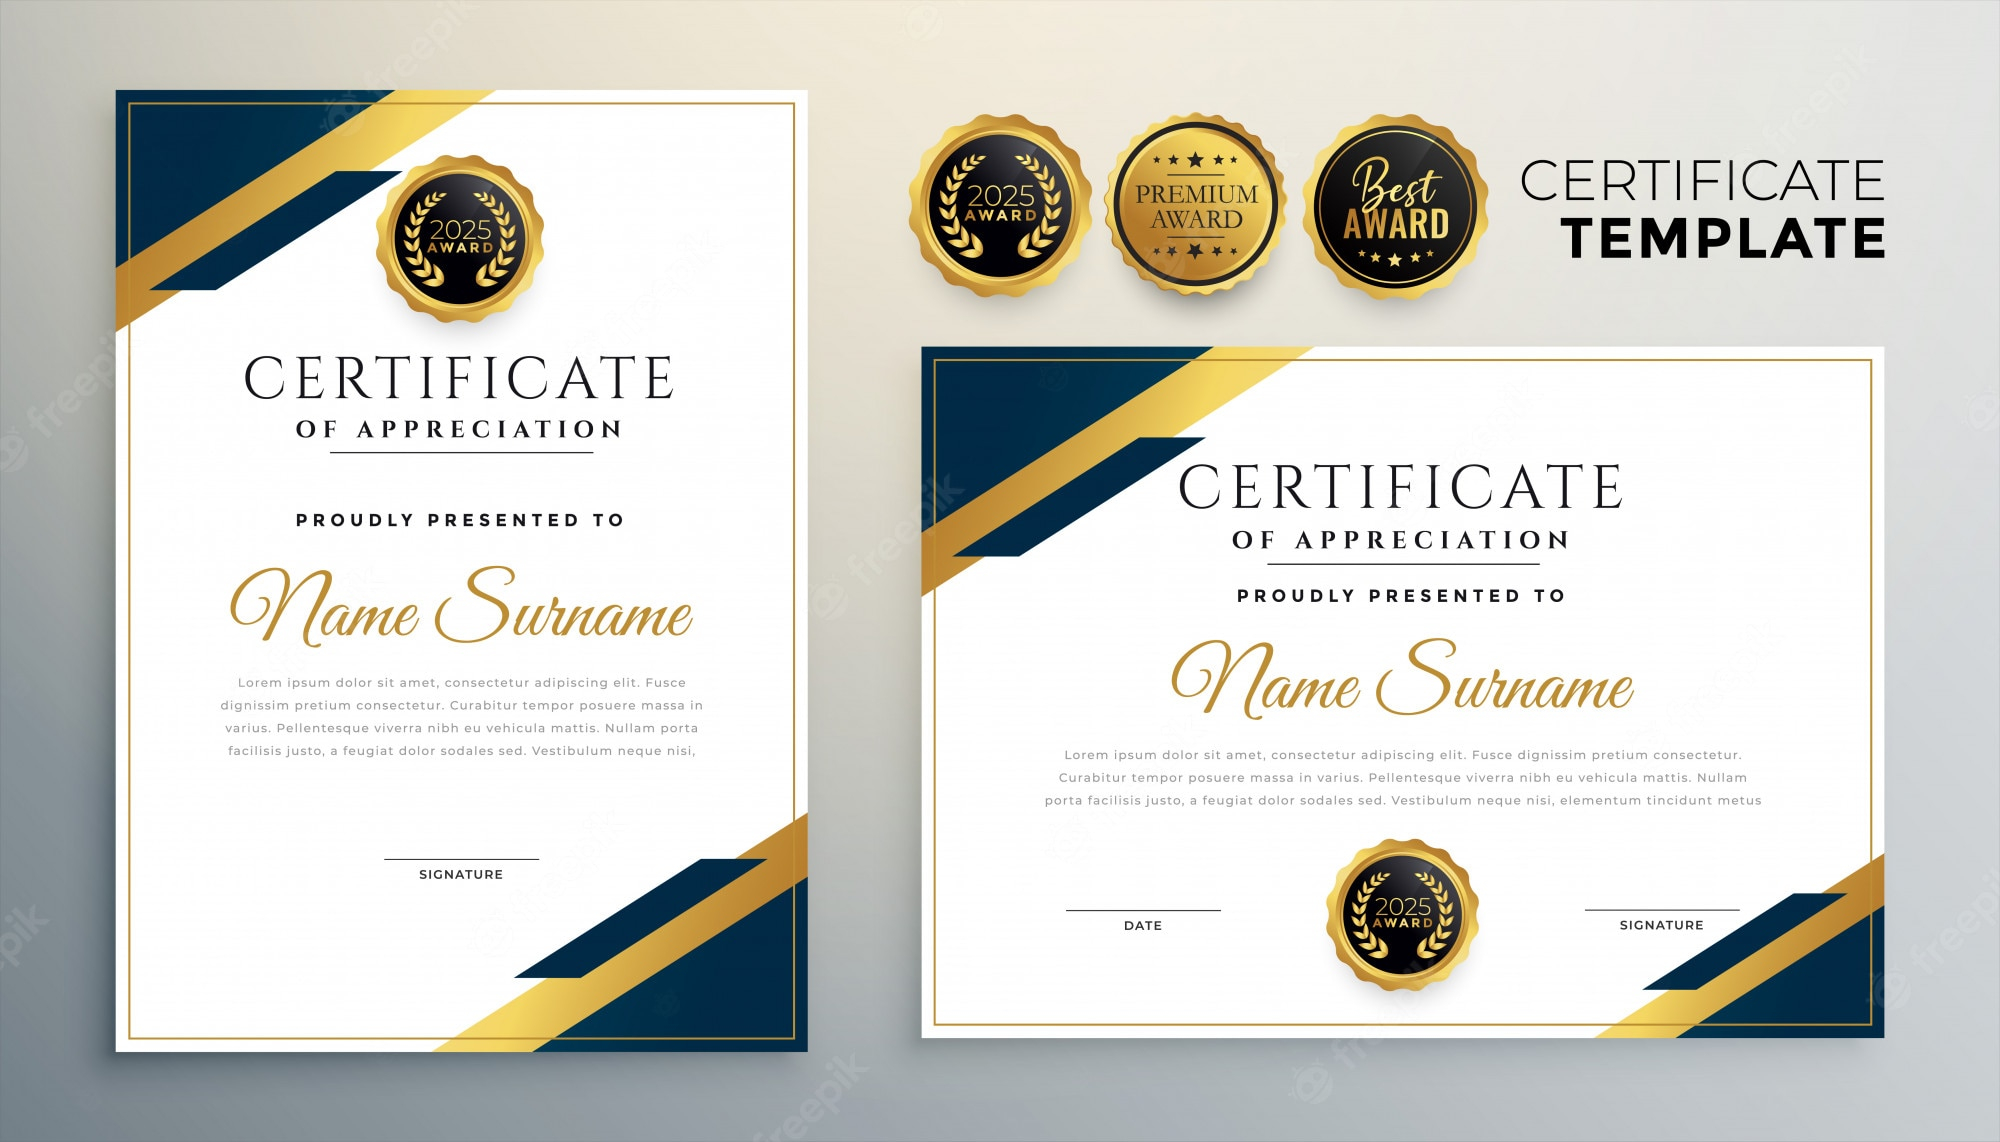 Certificate Images - Free Download on Freepik Inside Award Certificate Design Template